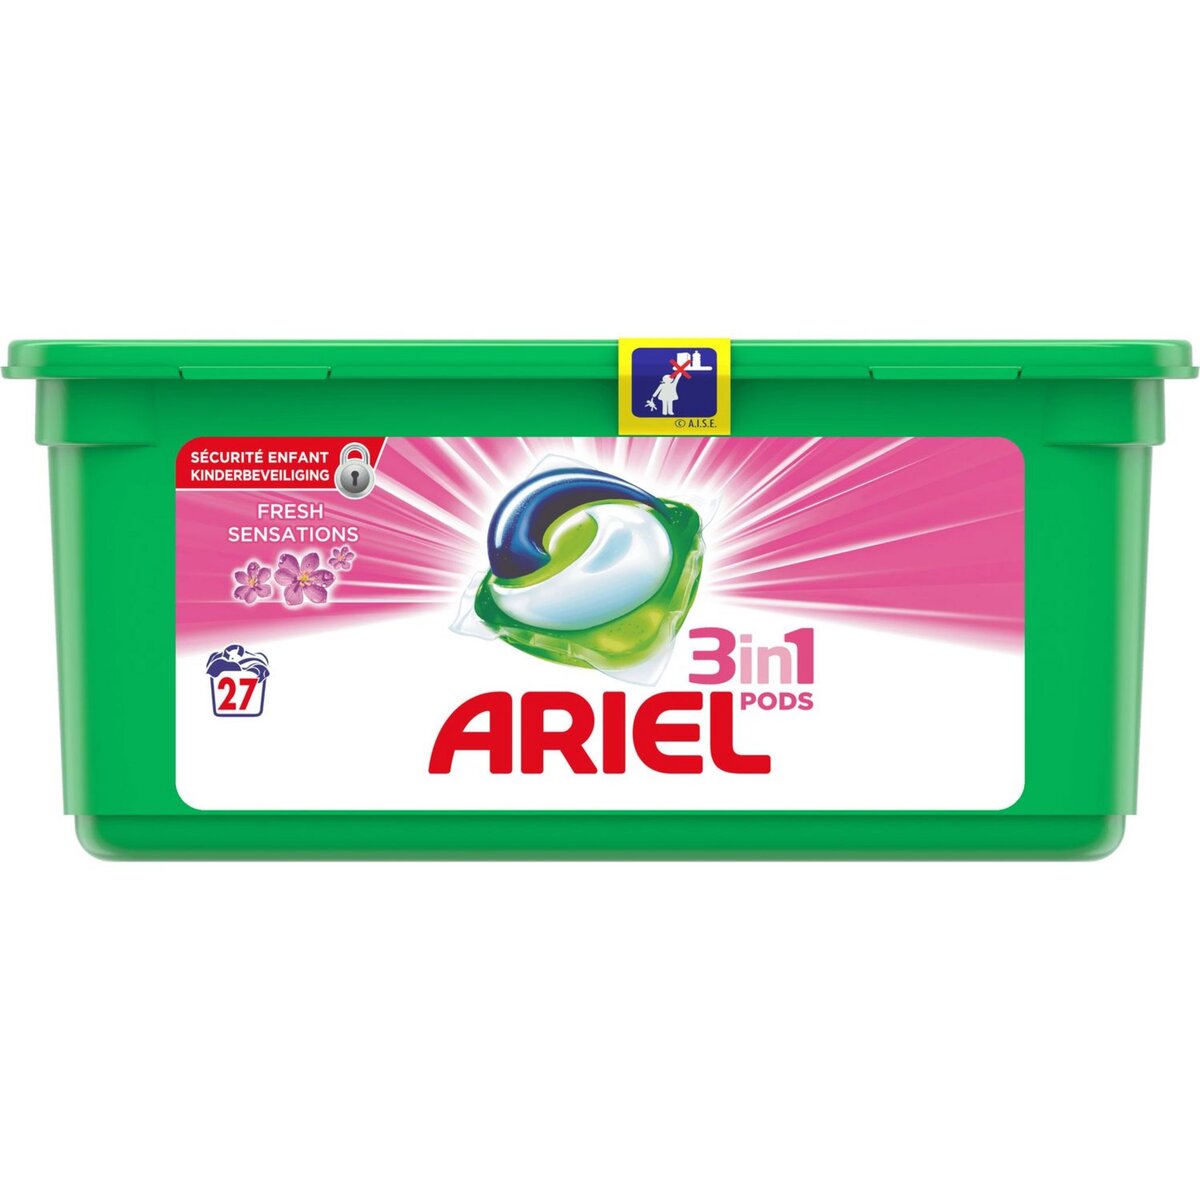 ARIEL Pods lessive capsules fresh sensations 27 lavages 27 capsules